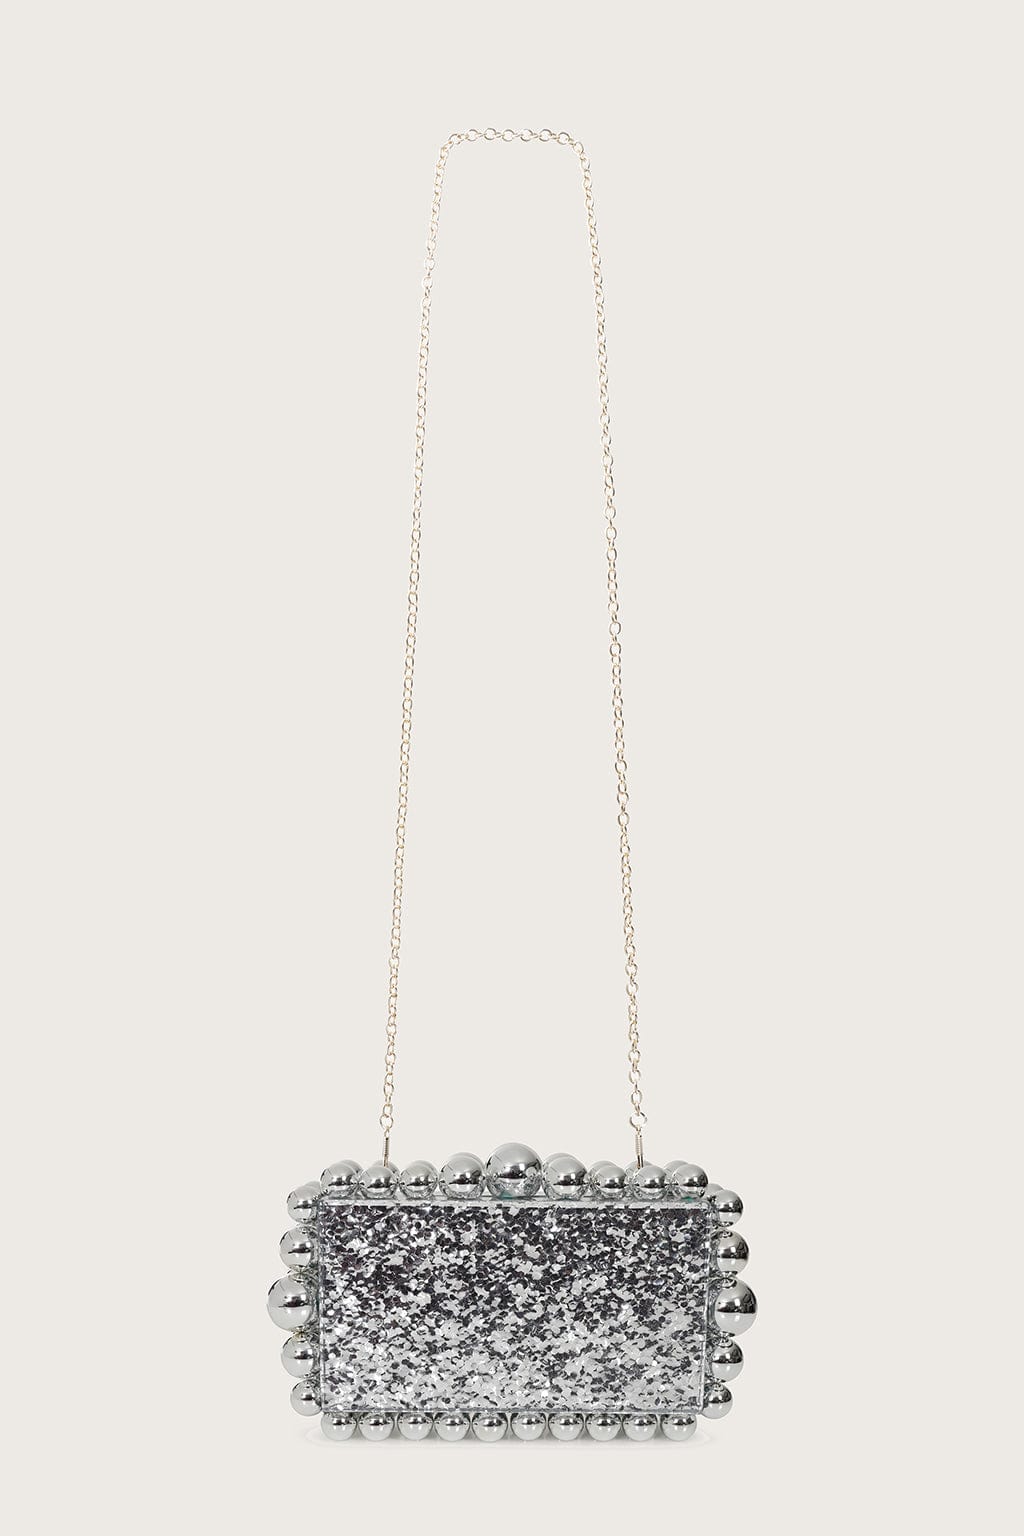 TIA Marbled Faux Pearl Box Clutch Bag in Silver